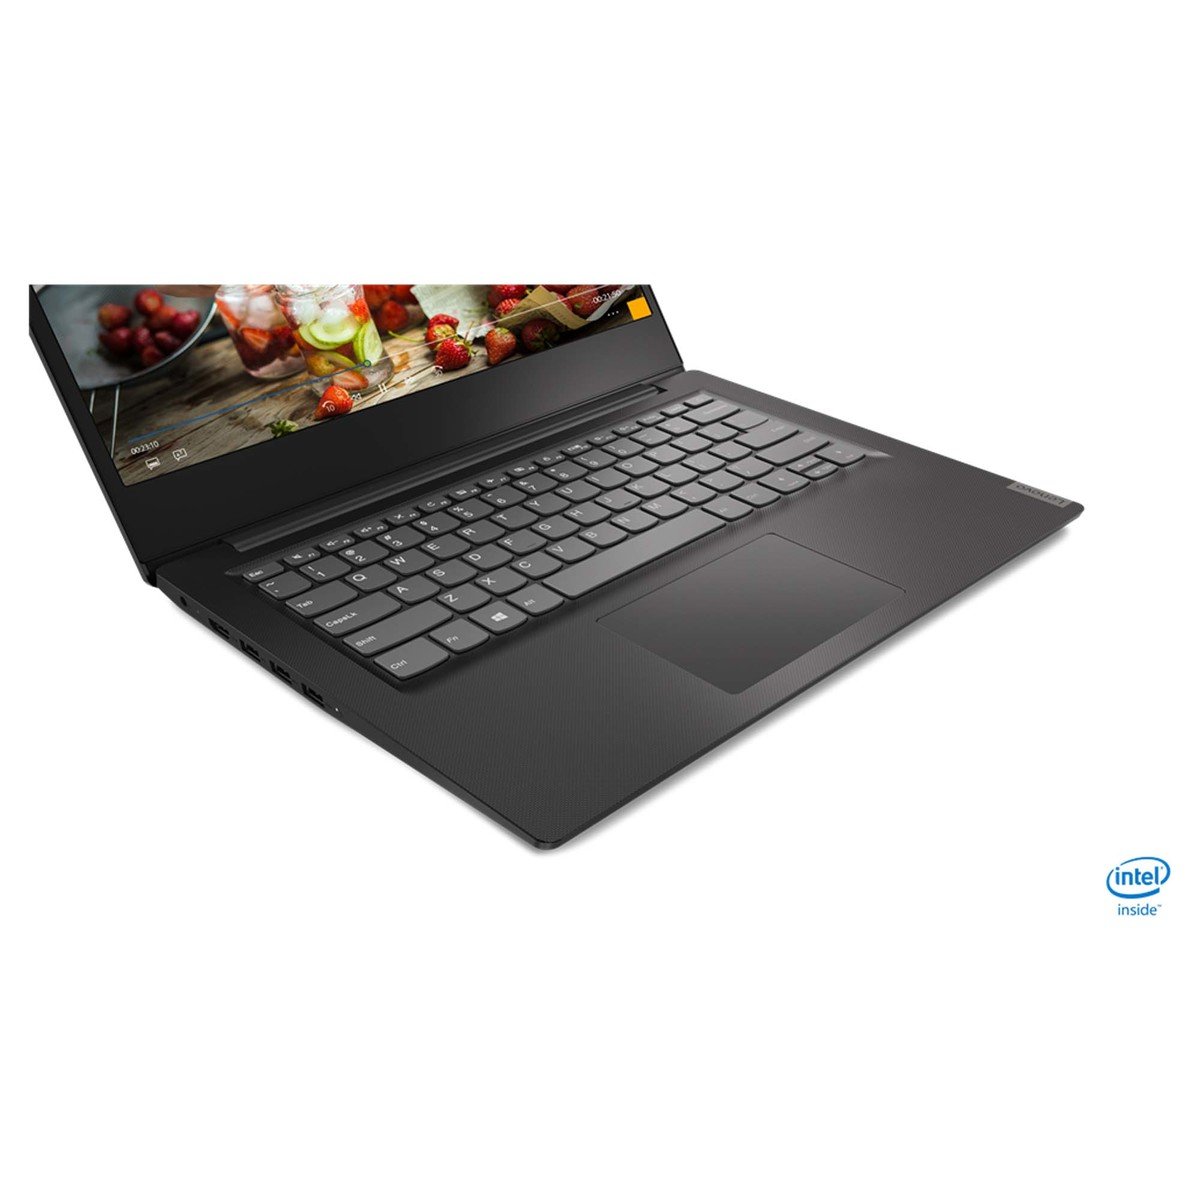 Lenovo  Ideapad S145-81VD0087AX 15 Inch LED Laptop,Intel i3-8130U 2.3 GHz, 4 GB RAM, 1TB HDD, Windows 10 ,Granite Black